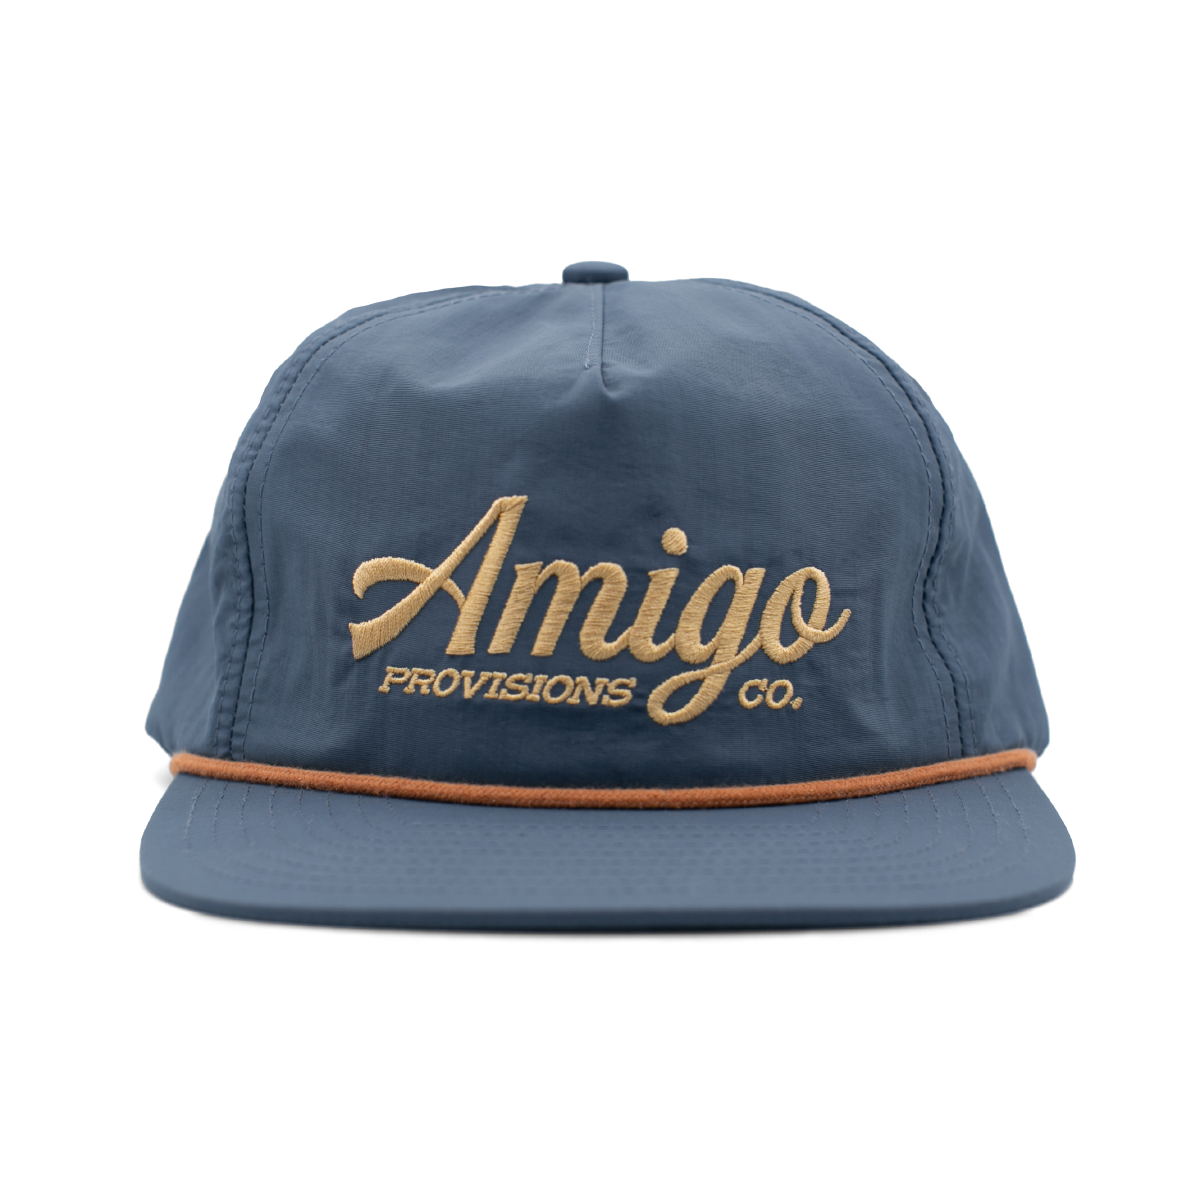 Amigo Embroidered Logo Hat